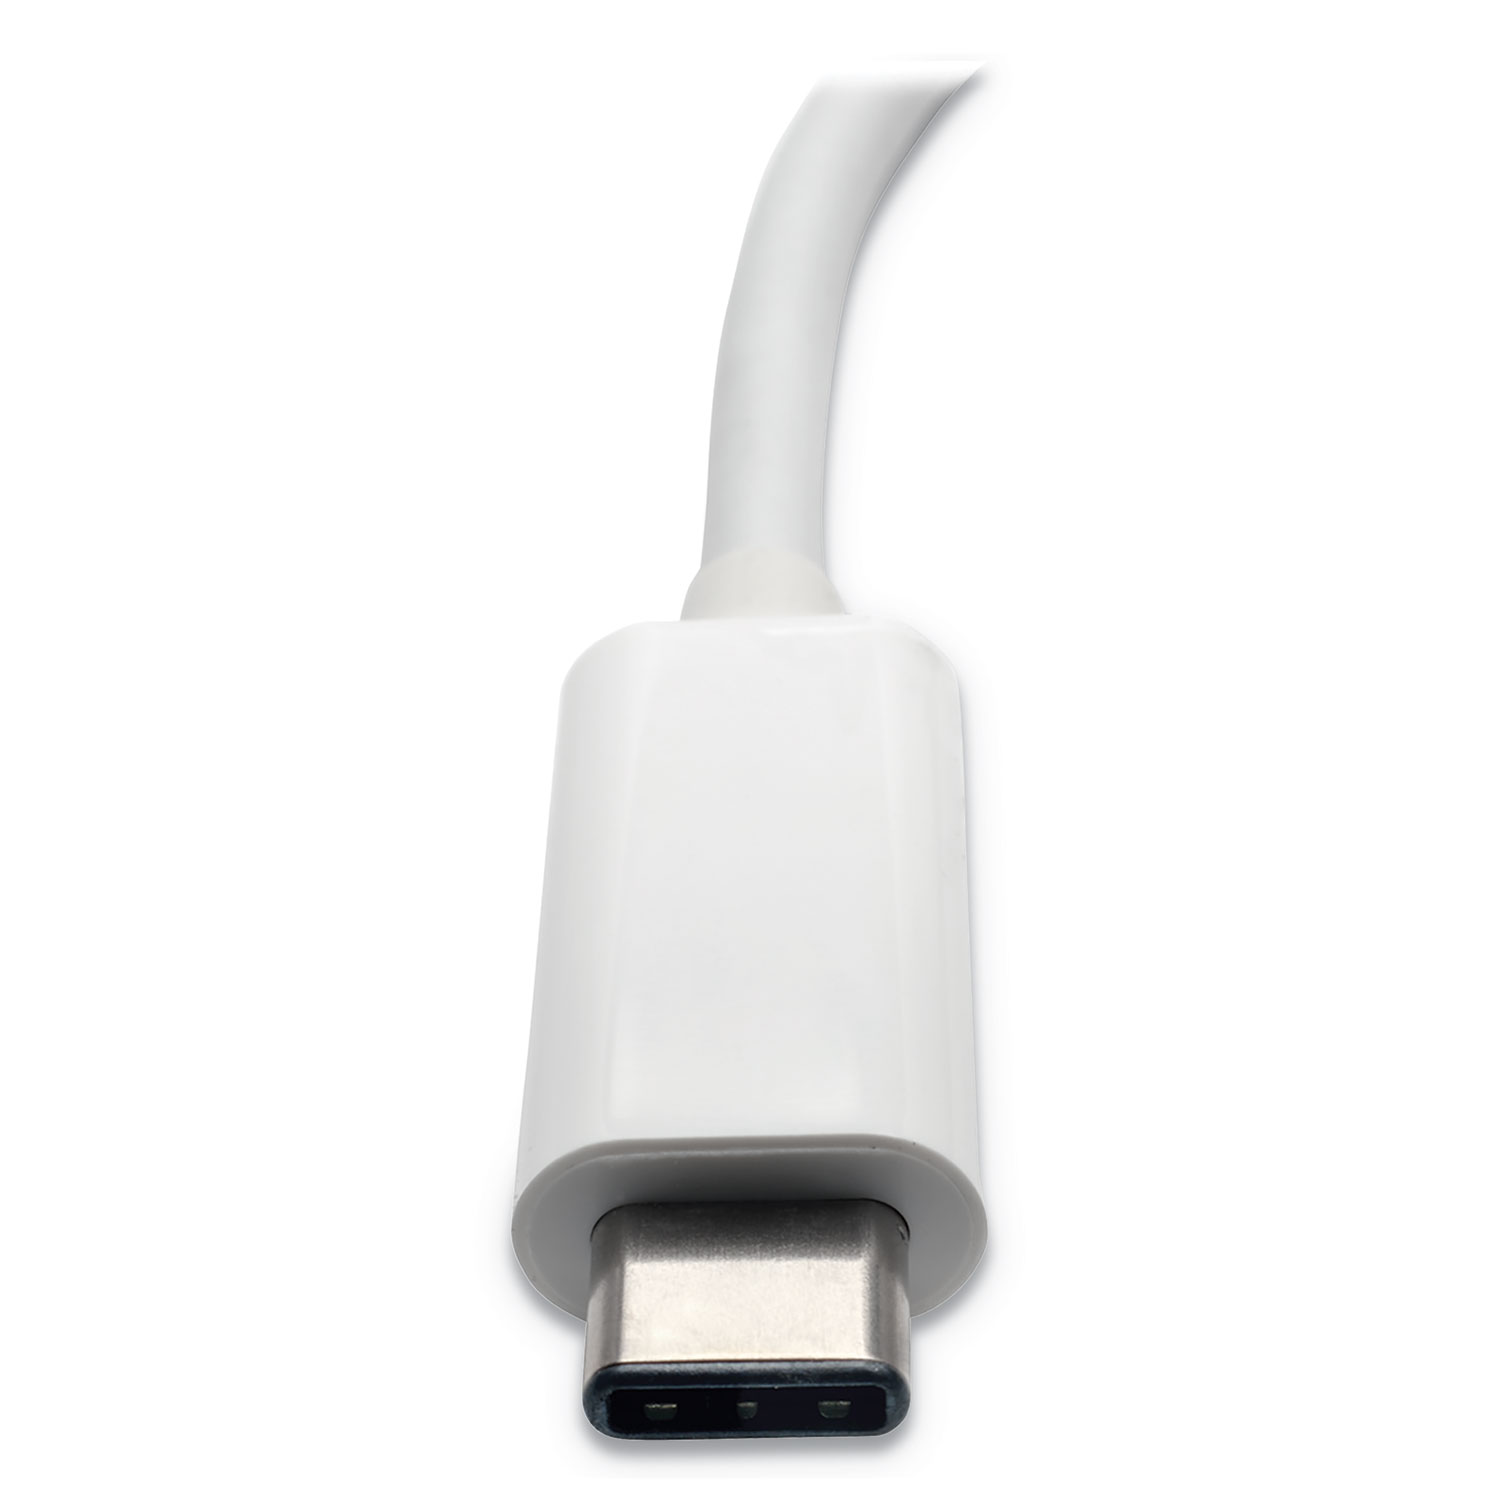 USB 3.1 Gen 1 USB-C to DVI Adapter, USB-C PD Charging Port